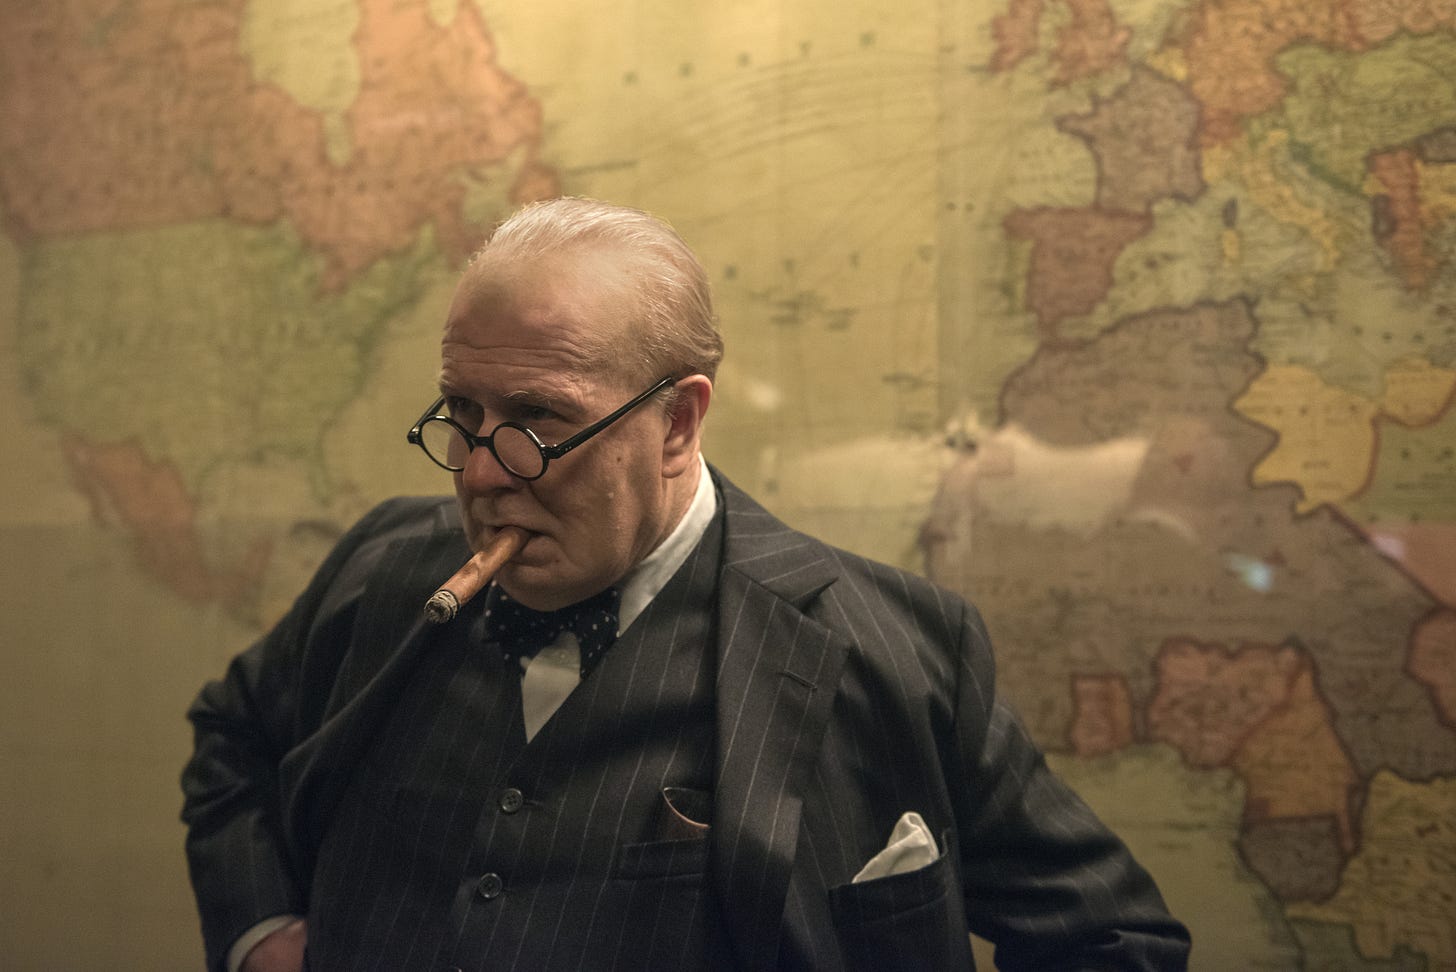 Gary Oldman as Winston Churchill in “Darkest Hour” (2017)